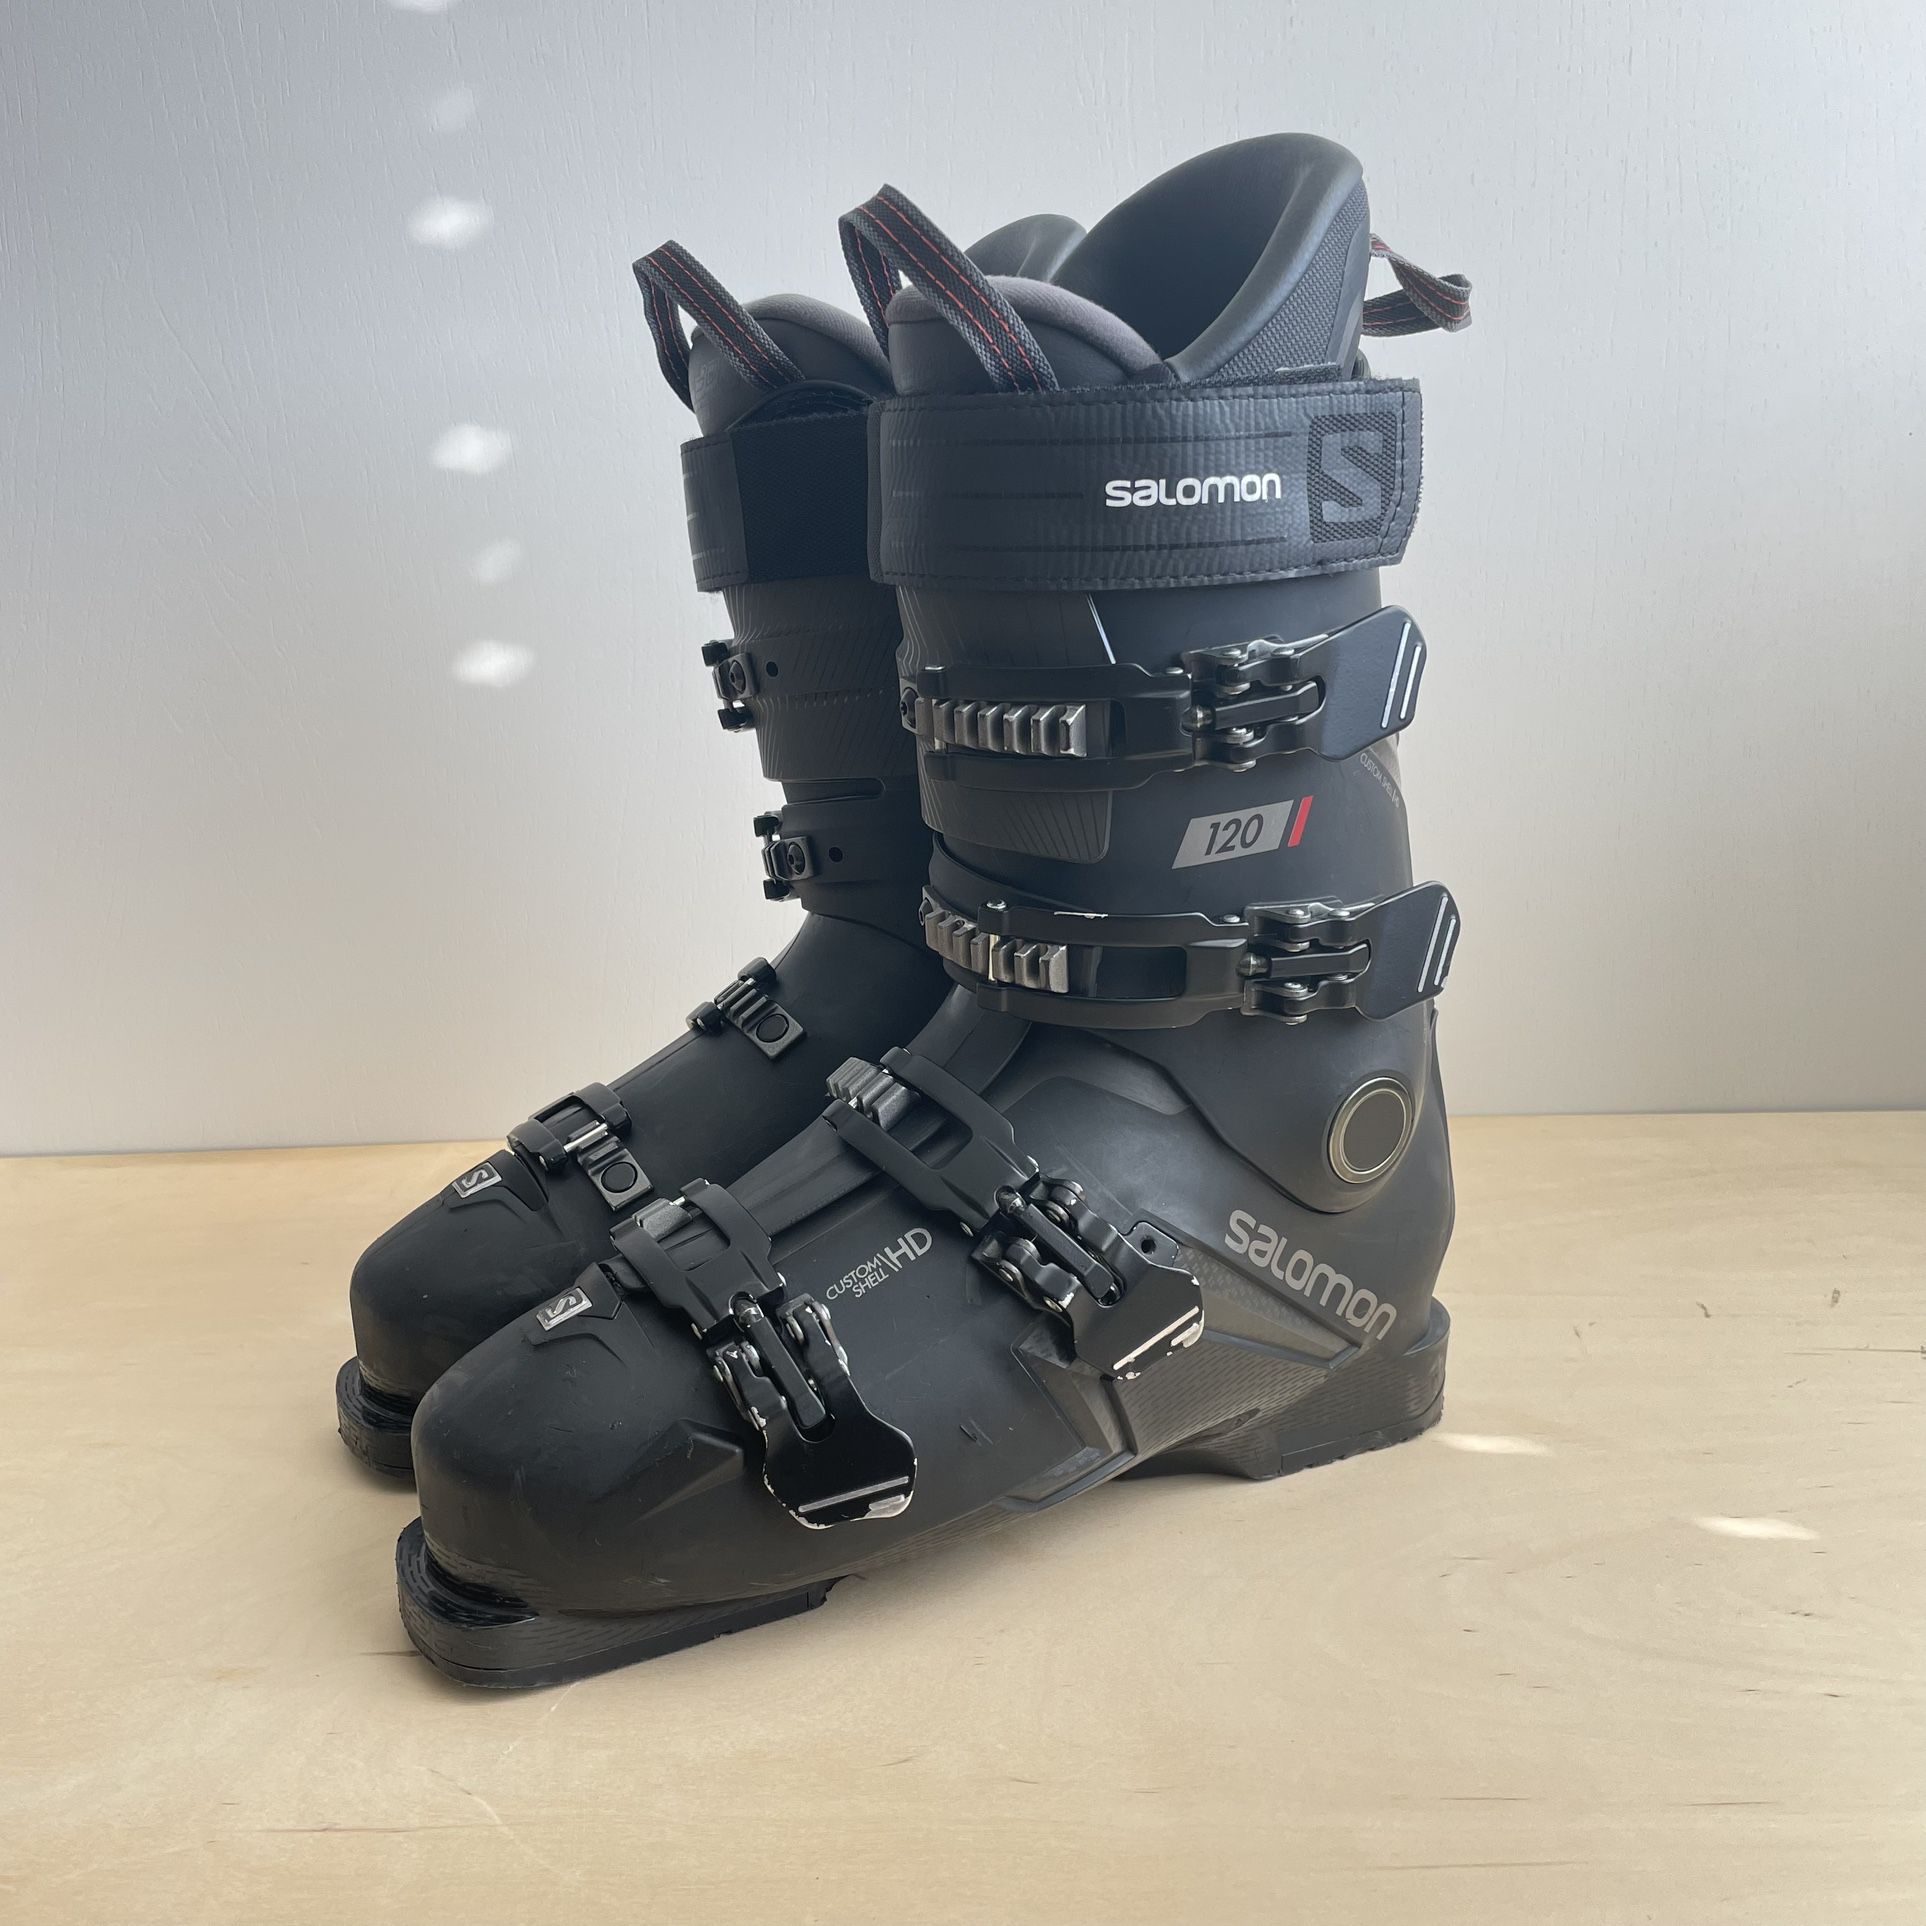 Salomon Mens Ski S/Pro 120 Flex Size 28/28.5 Shoe Size 10 - 11 for Sale in Dana CA - OfferUp